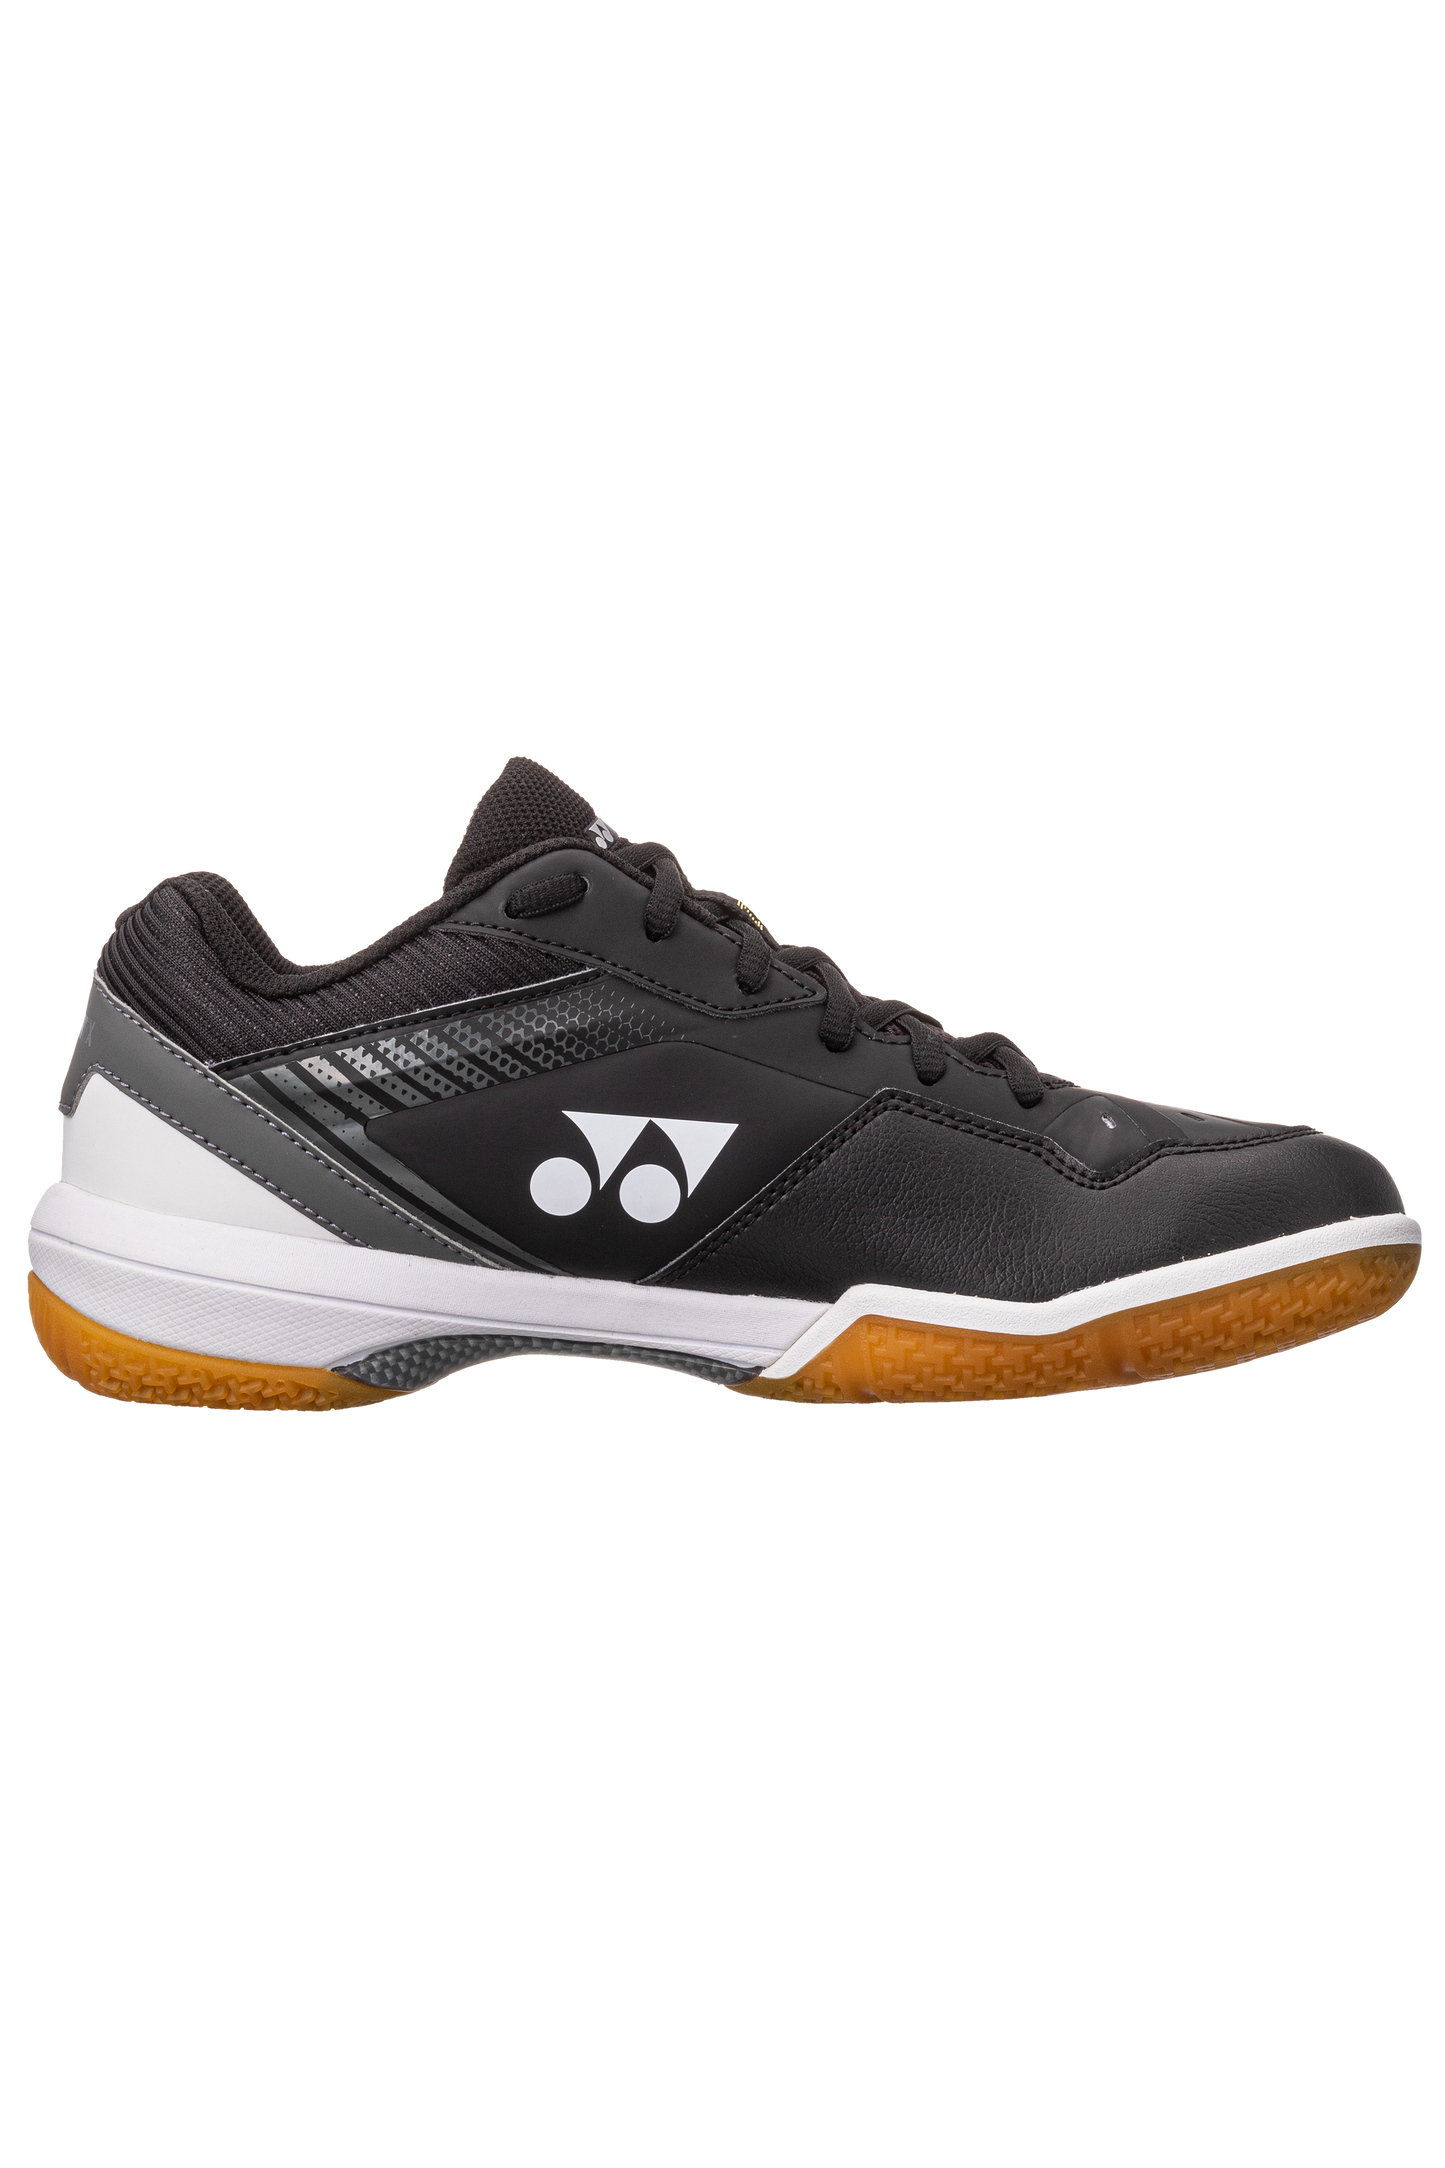 YONEX Badminton Shoes POWER CUSHION 65 Z3 MENS - Max Sports